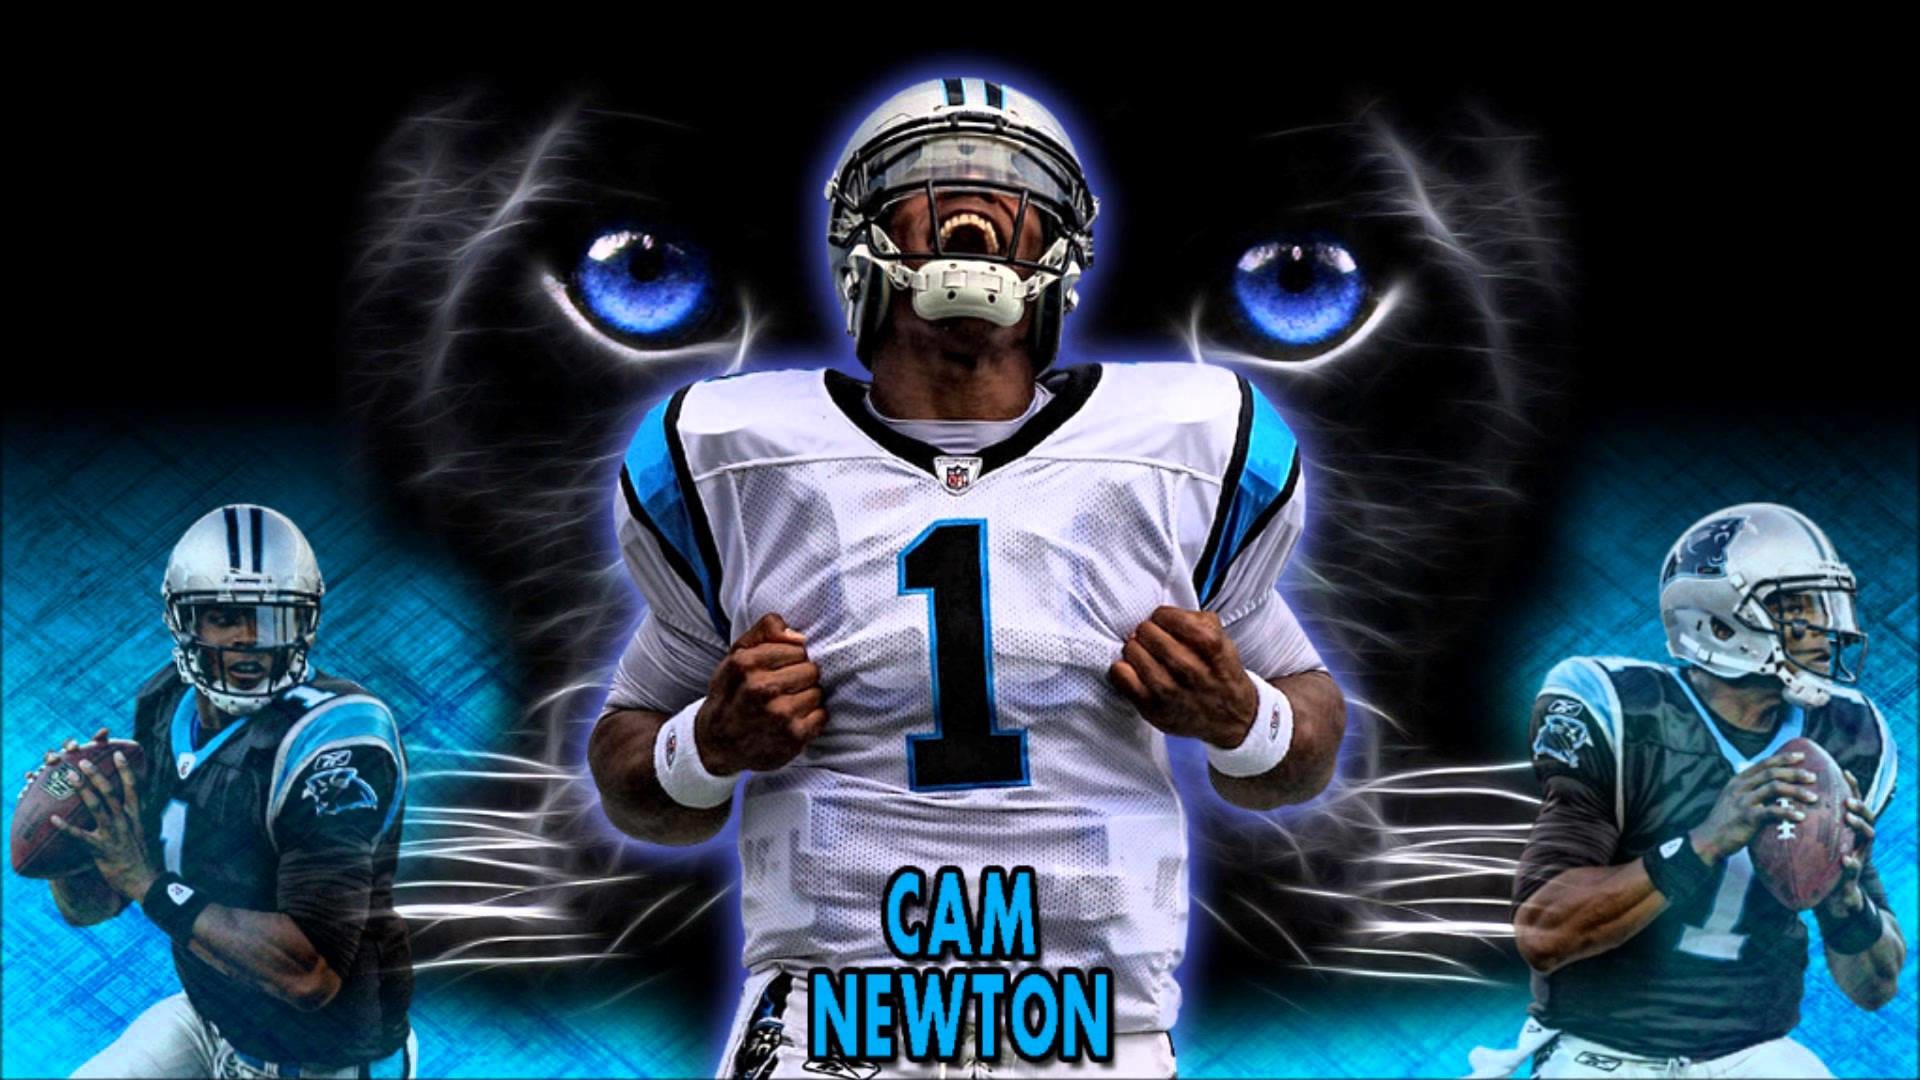 1920x1080 FREE NFL Cam Newton Wallpaper by youtube.com